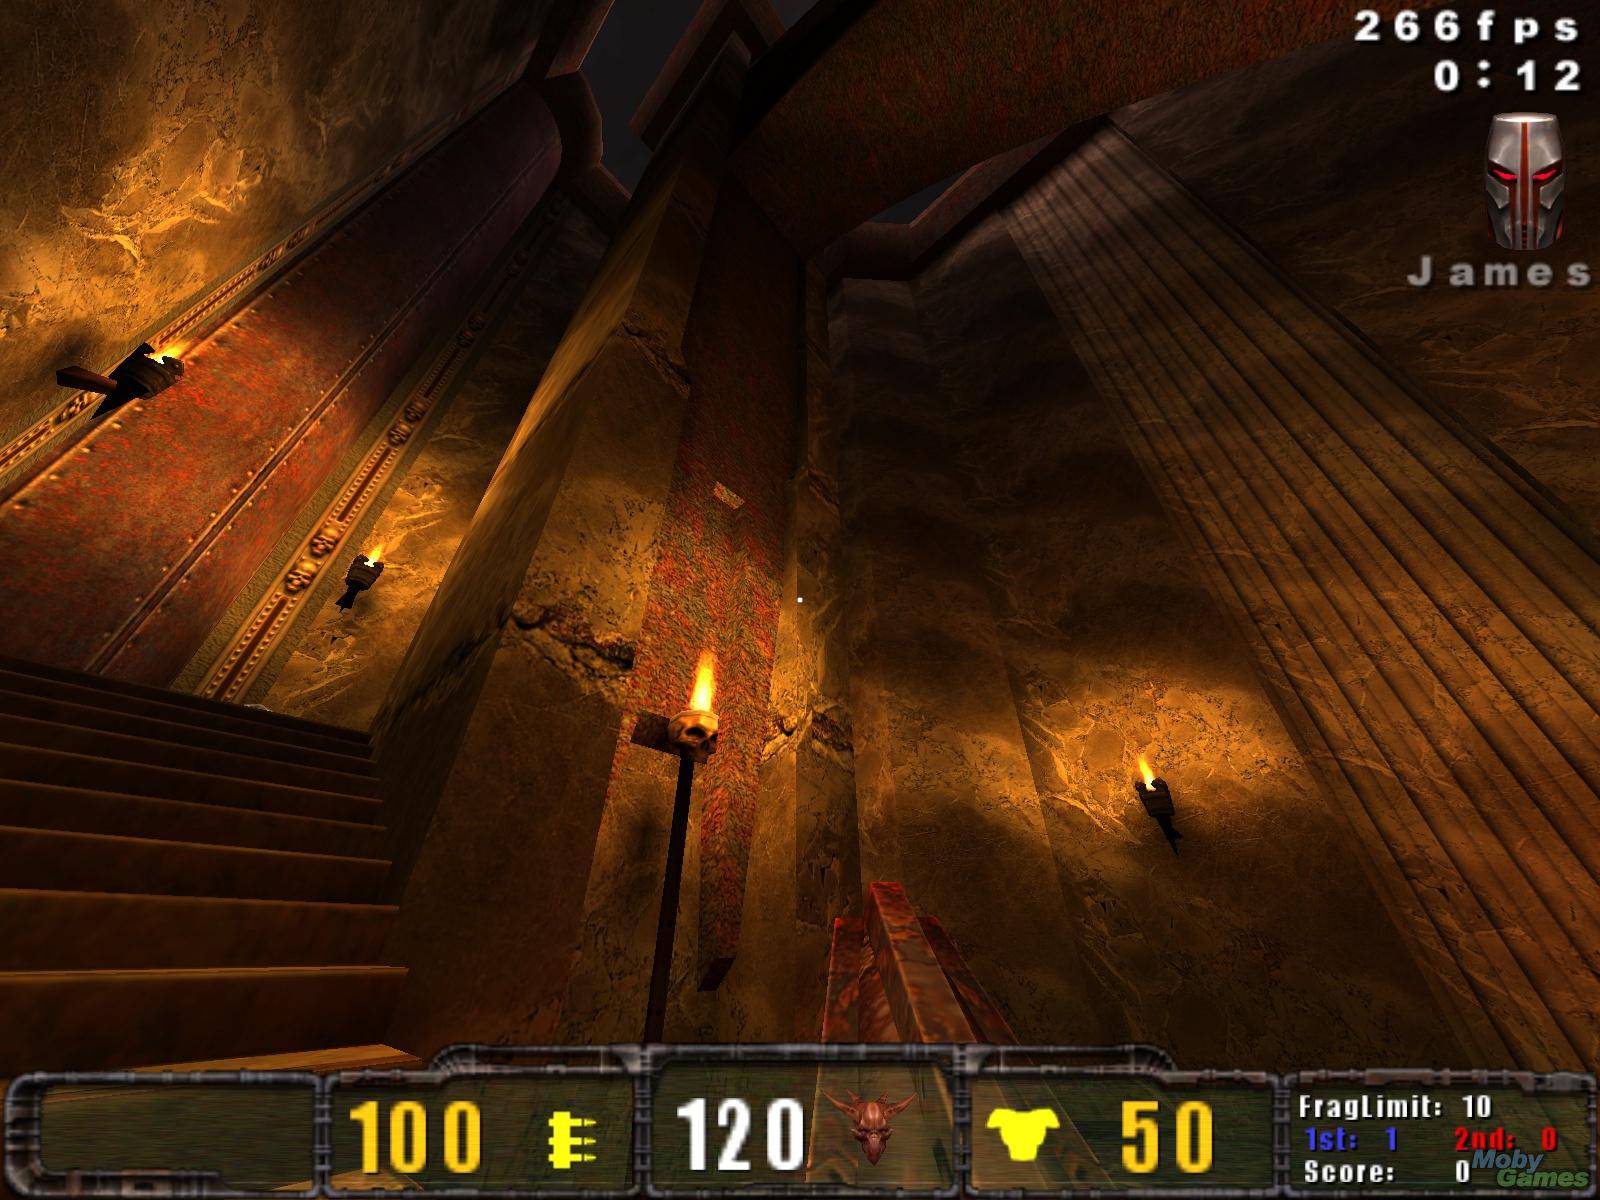 Quake 3 arena full version free download pc